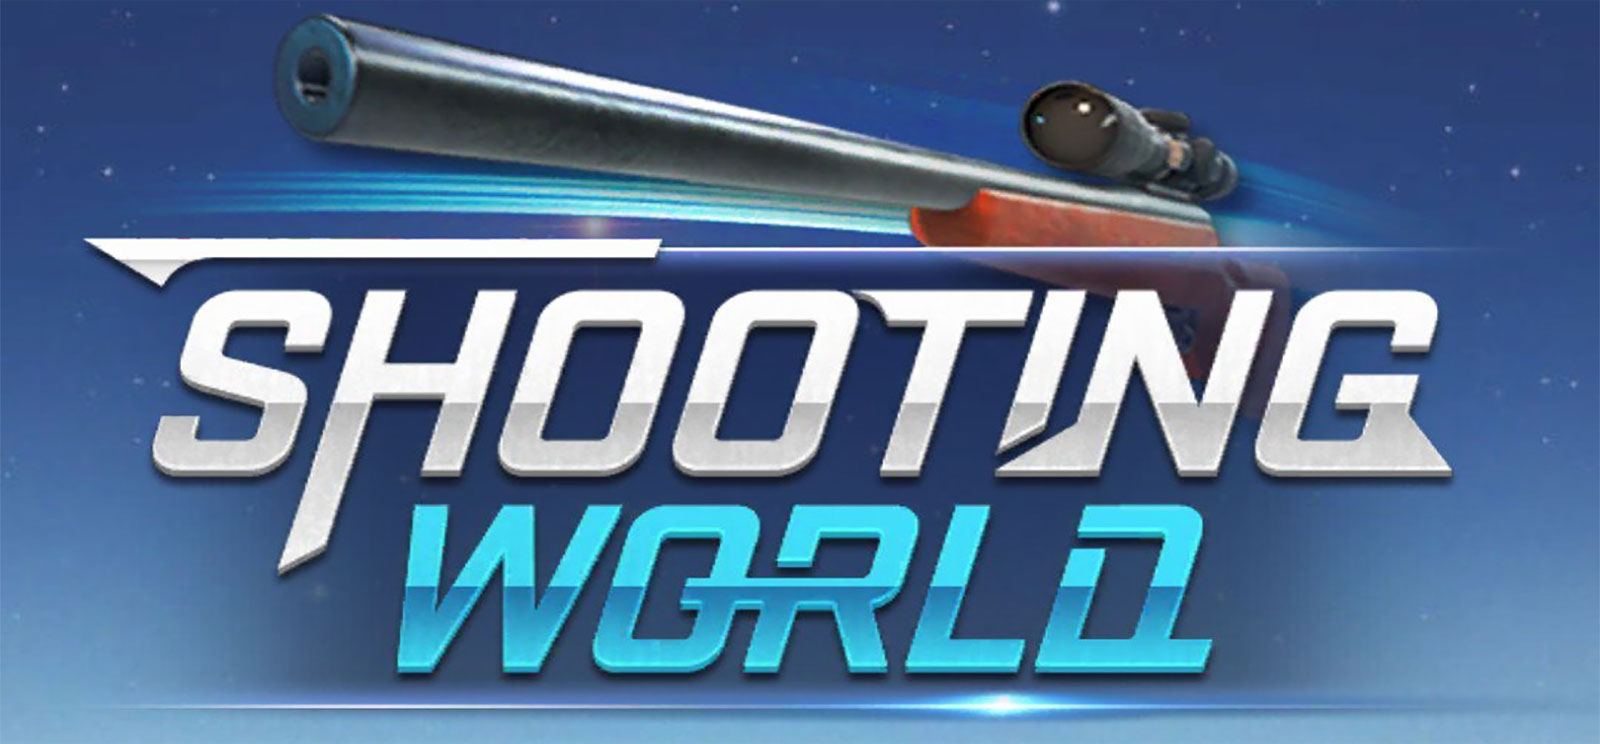 Shooting World Mod Apk